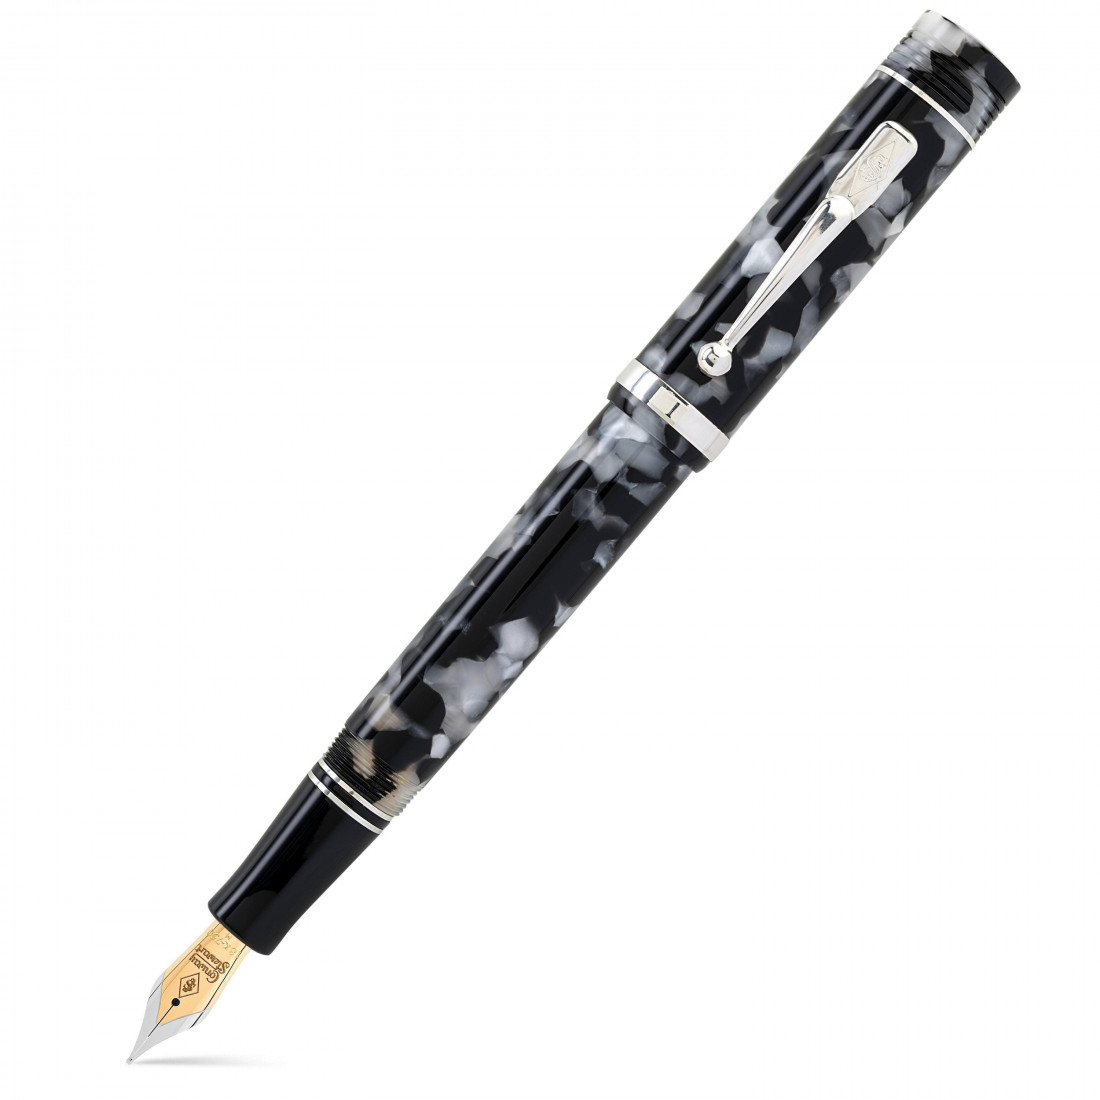 Conway Stewart Churchill Fresian Limited Edition Fountain Pen - Special nib